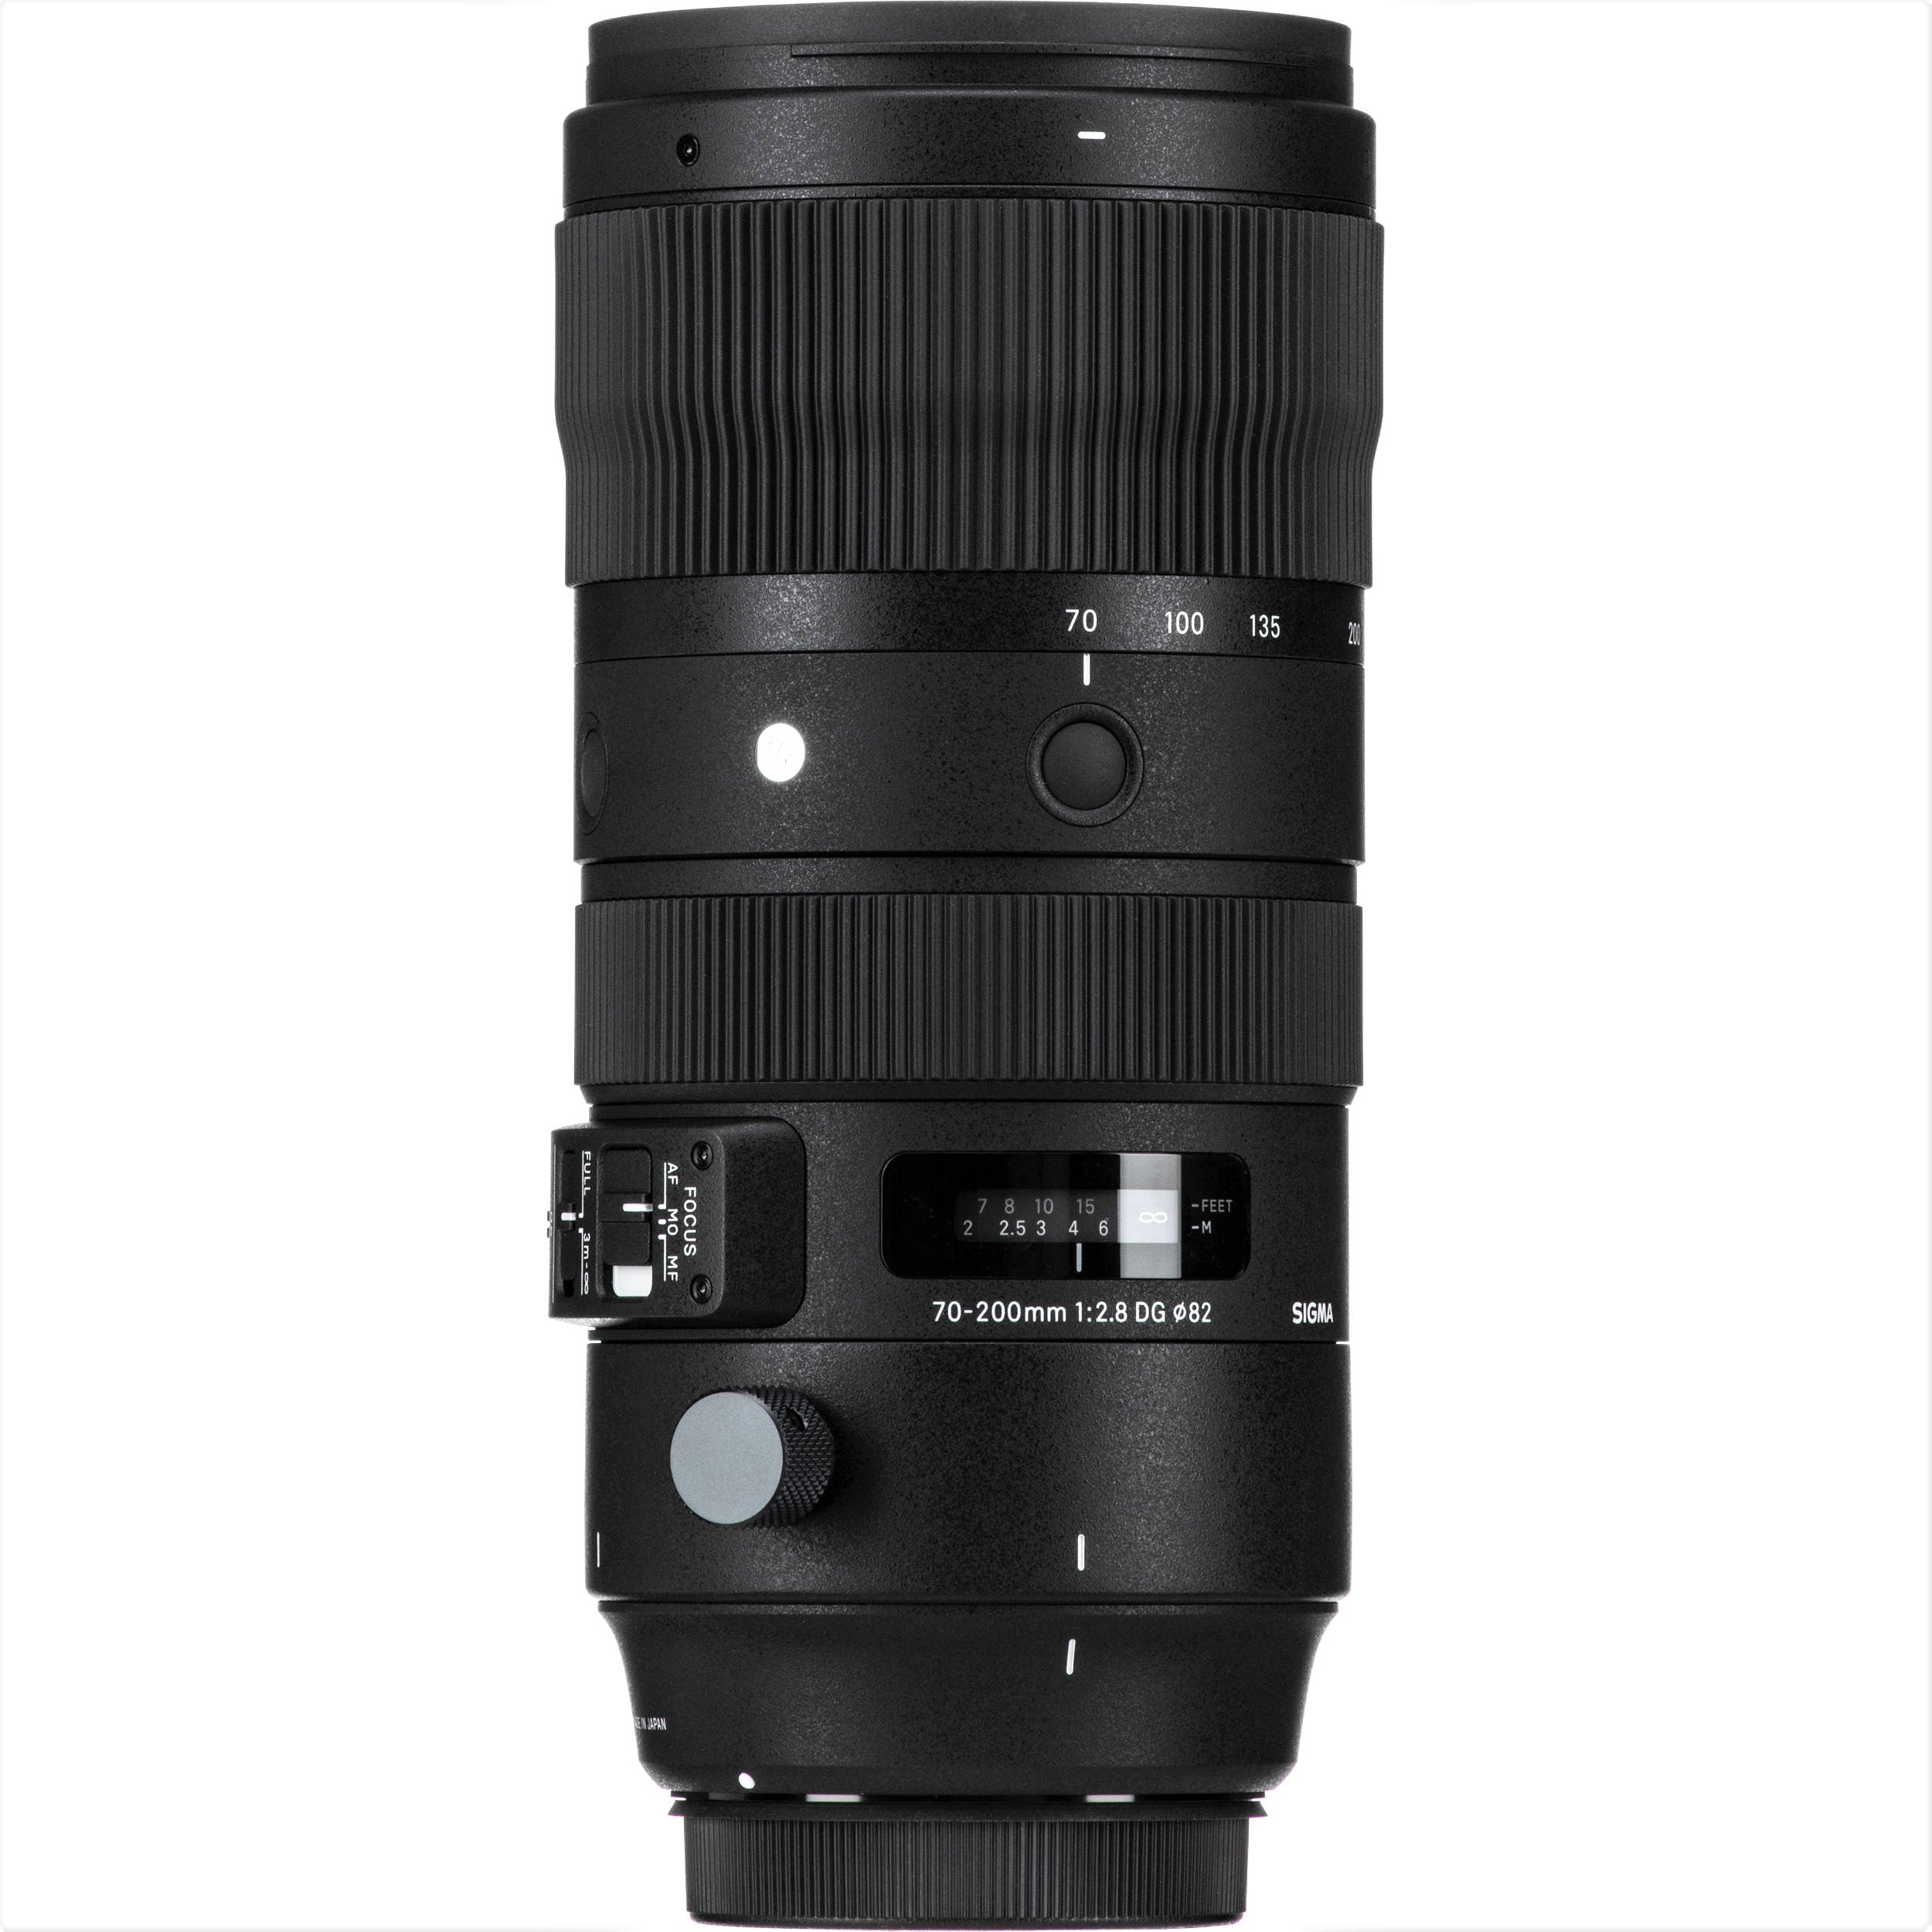 Sigma 70-200mm F2.8 DG OS HSM Sports Lens (Canon EF Mount)